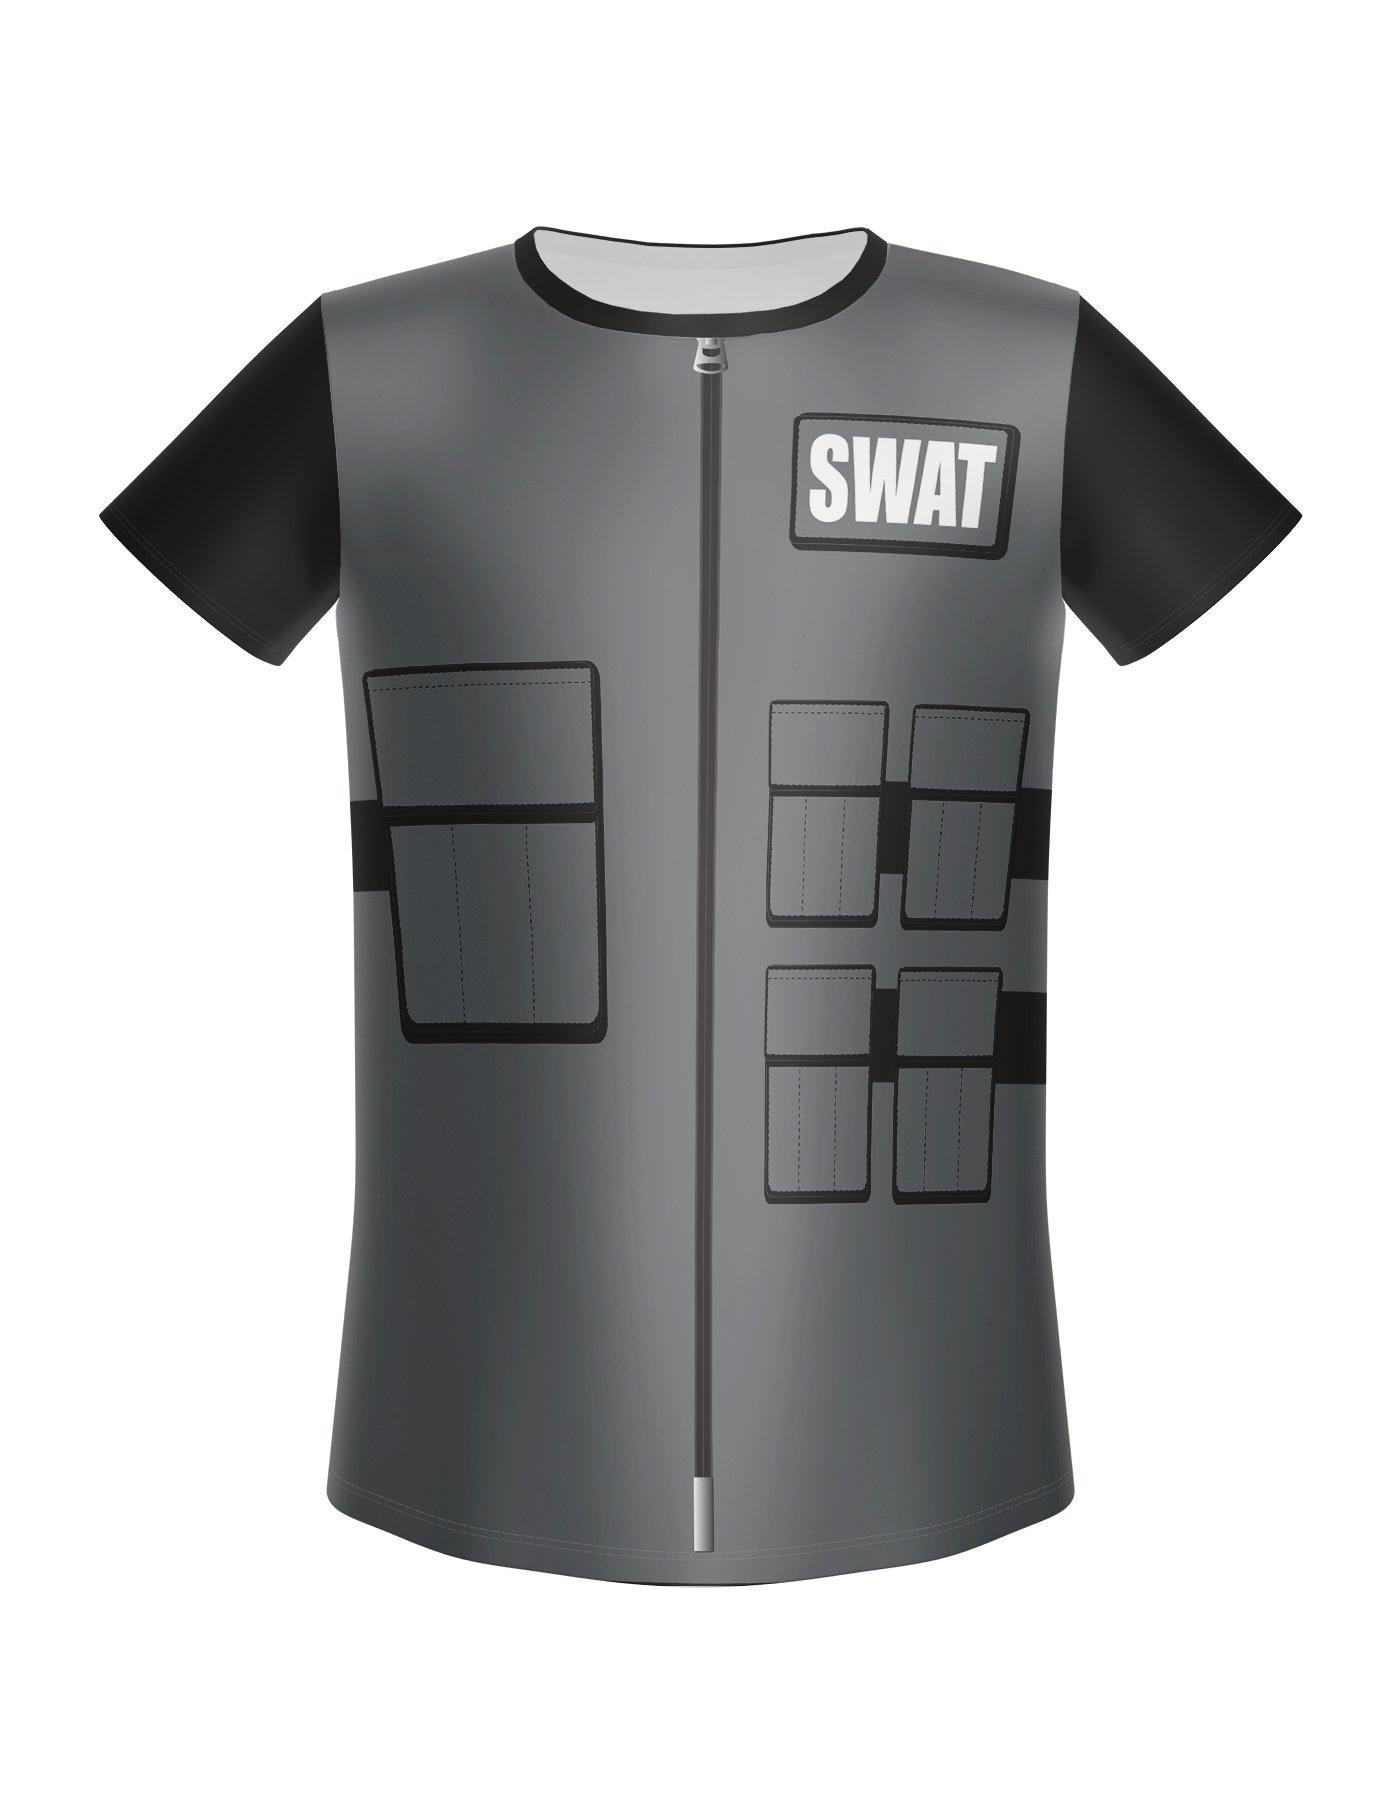 SWAT Boys Shirt - Hamilton Theatrical